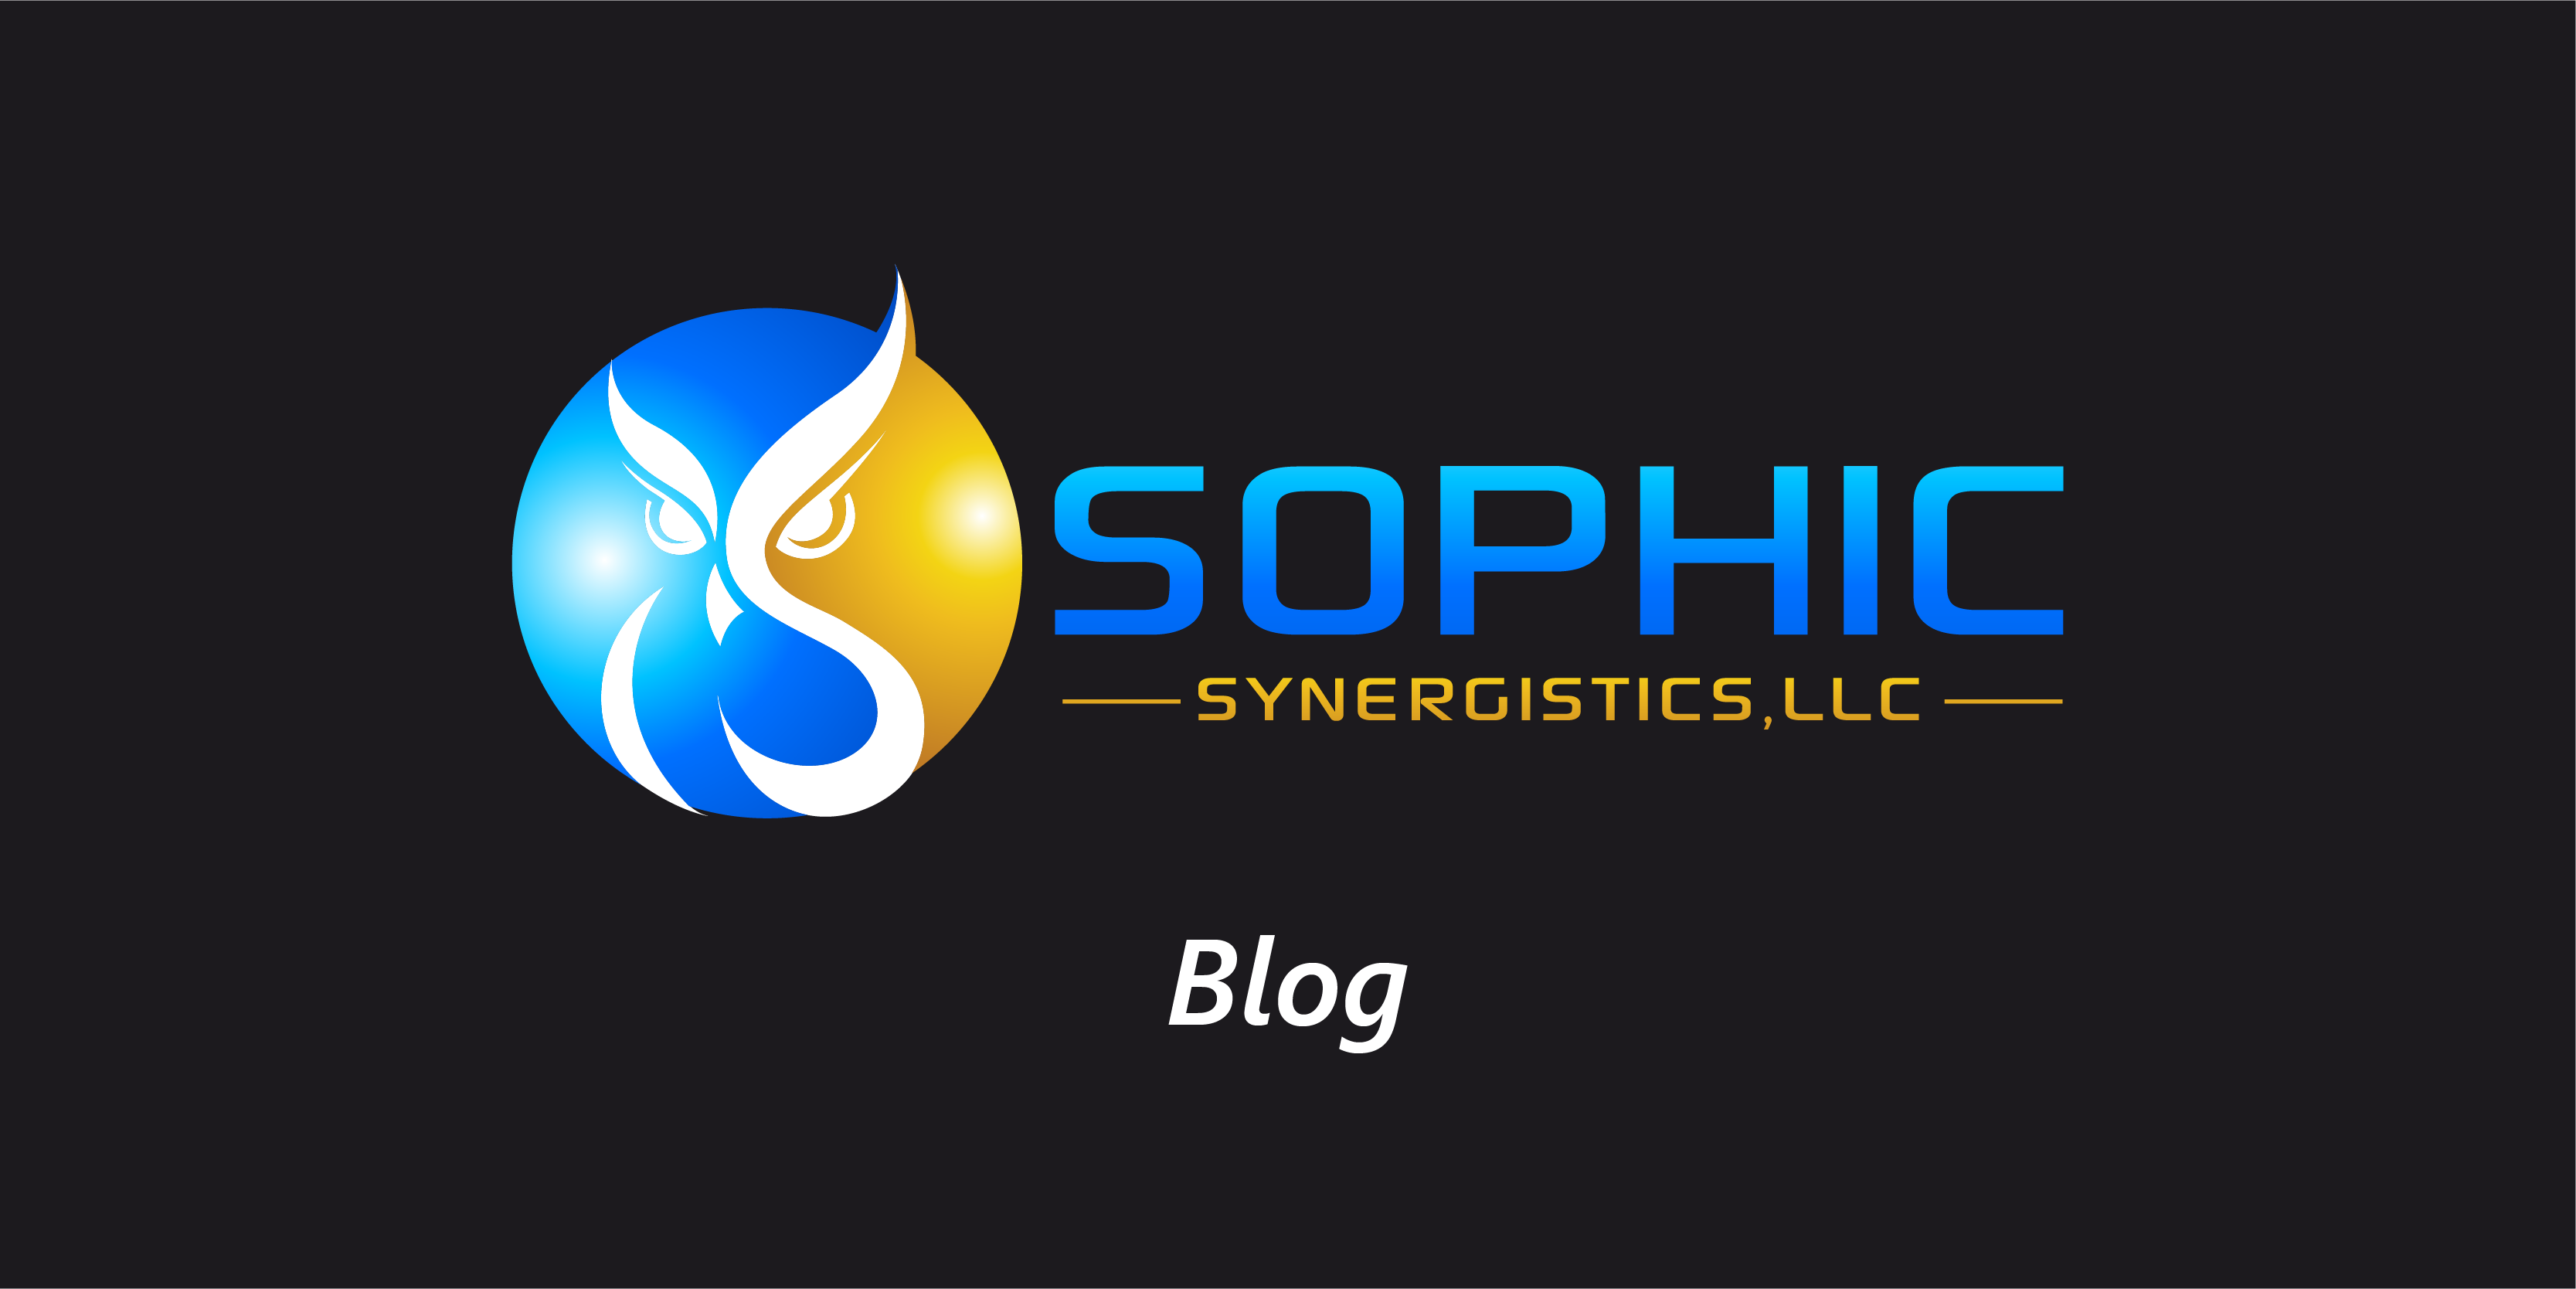 Sophic Synergistics, LLC Blog